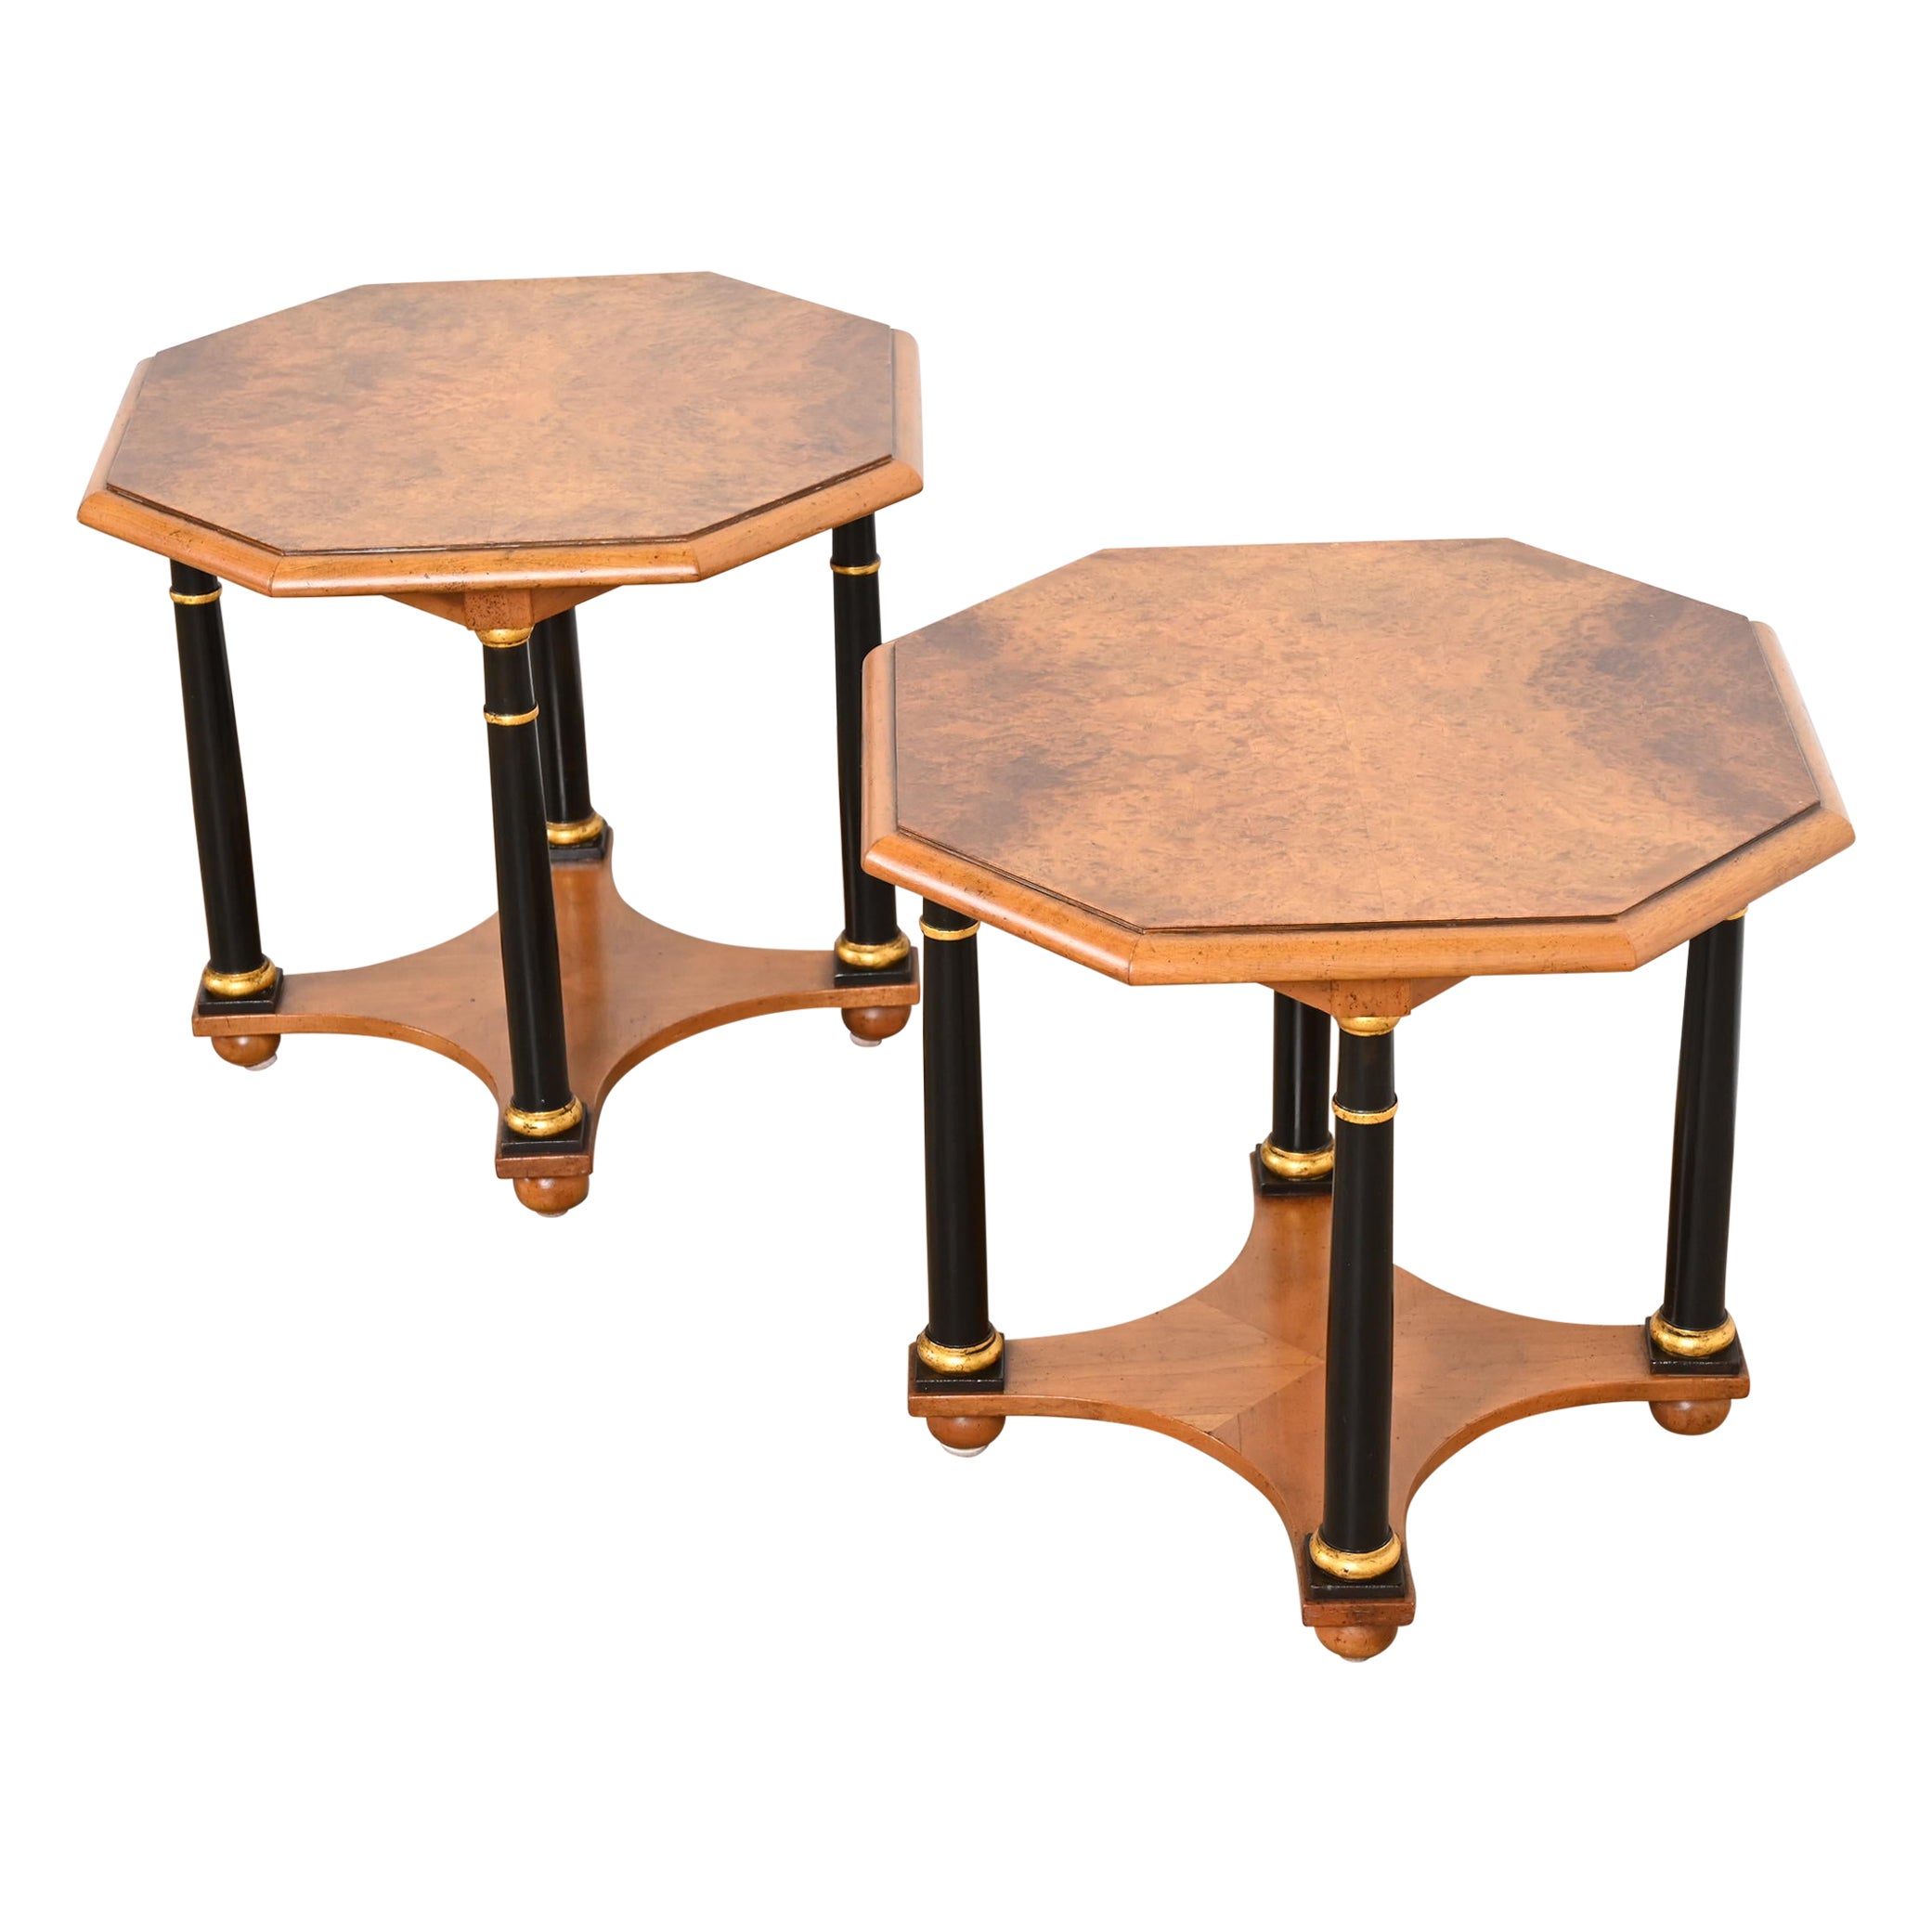 Baker Furniture Neoclassical Burled Walnut Tea Tables, Pair